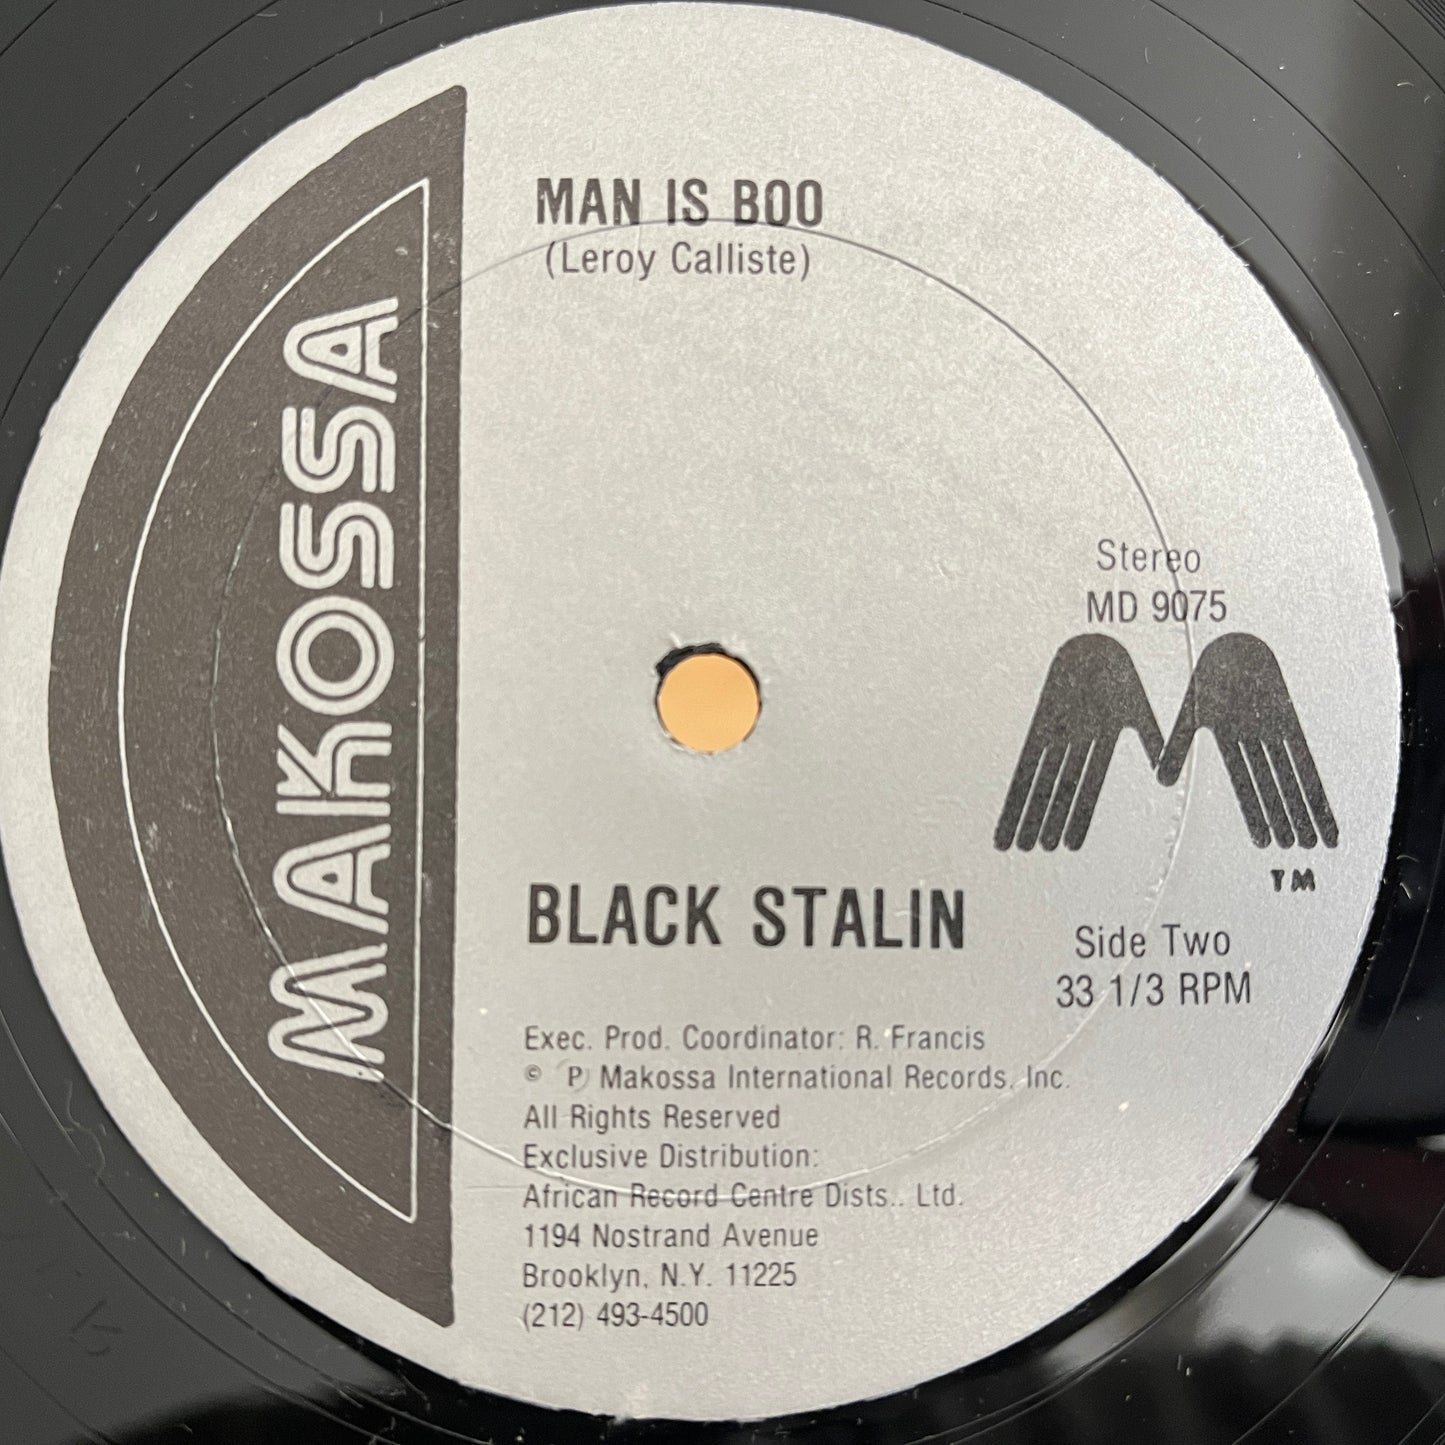 Black Stalin – '82